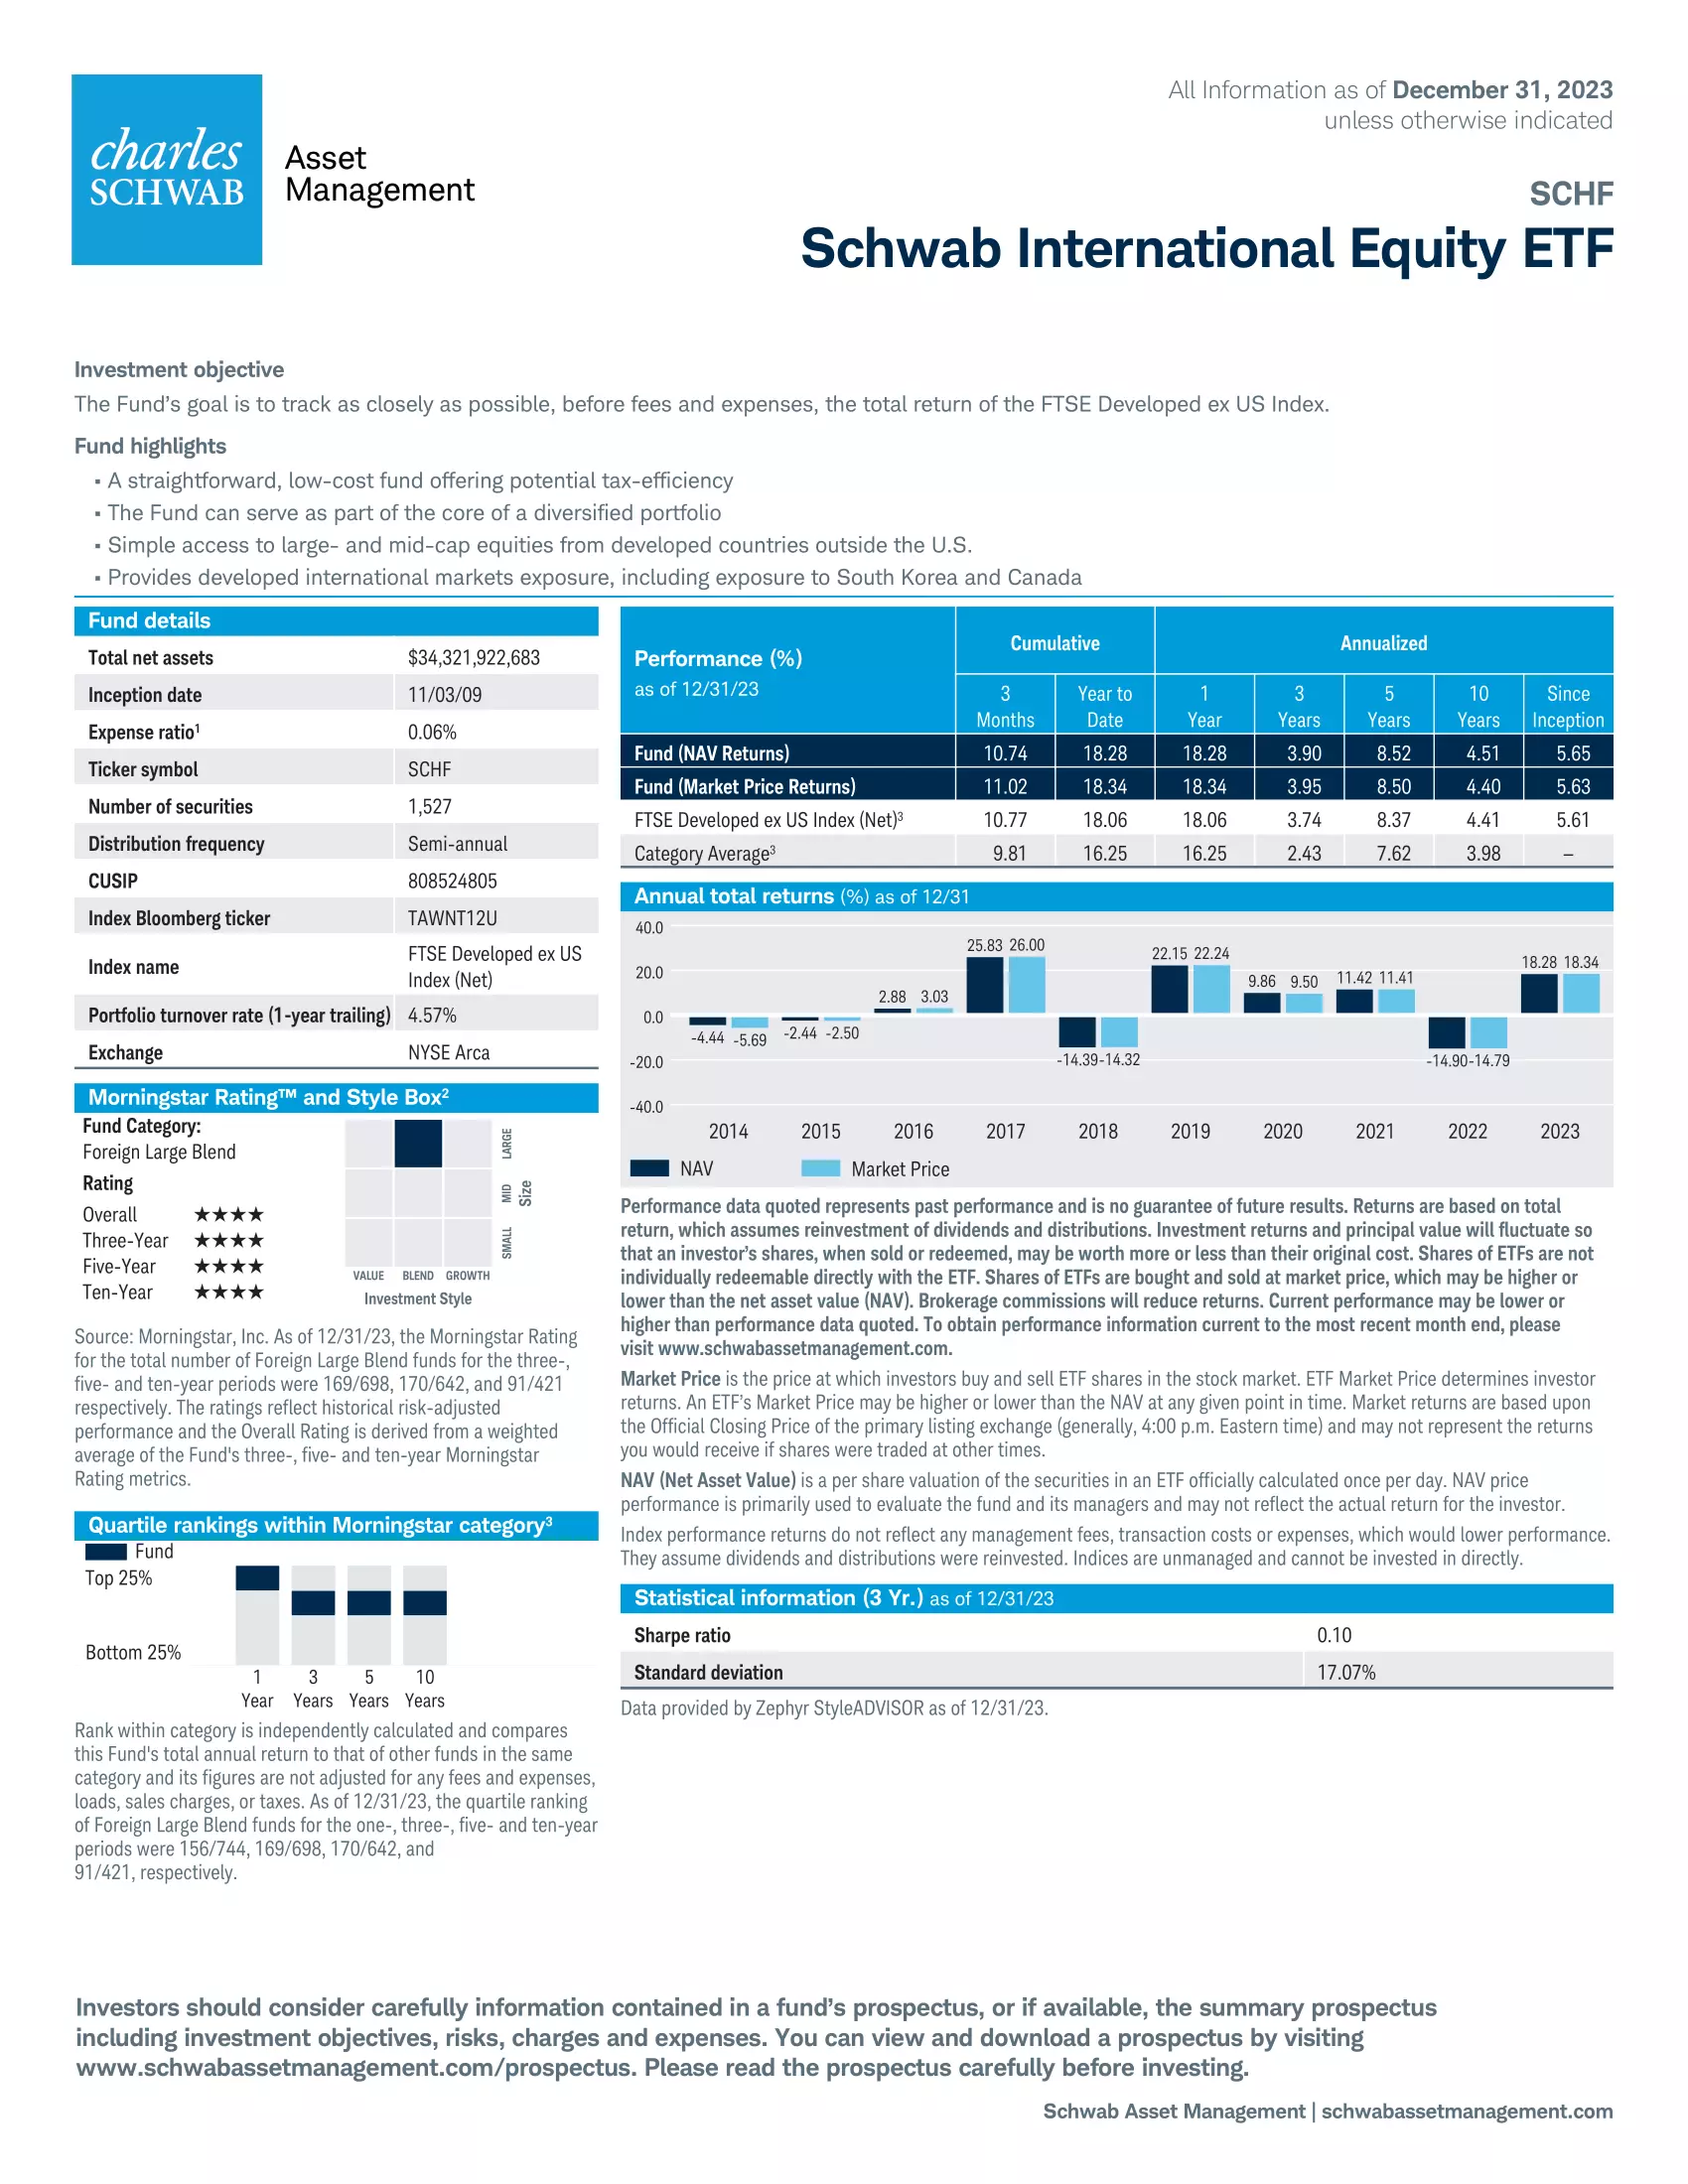 SCHF: Schwab International Equity ETF